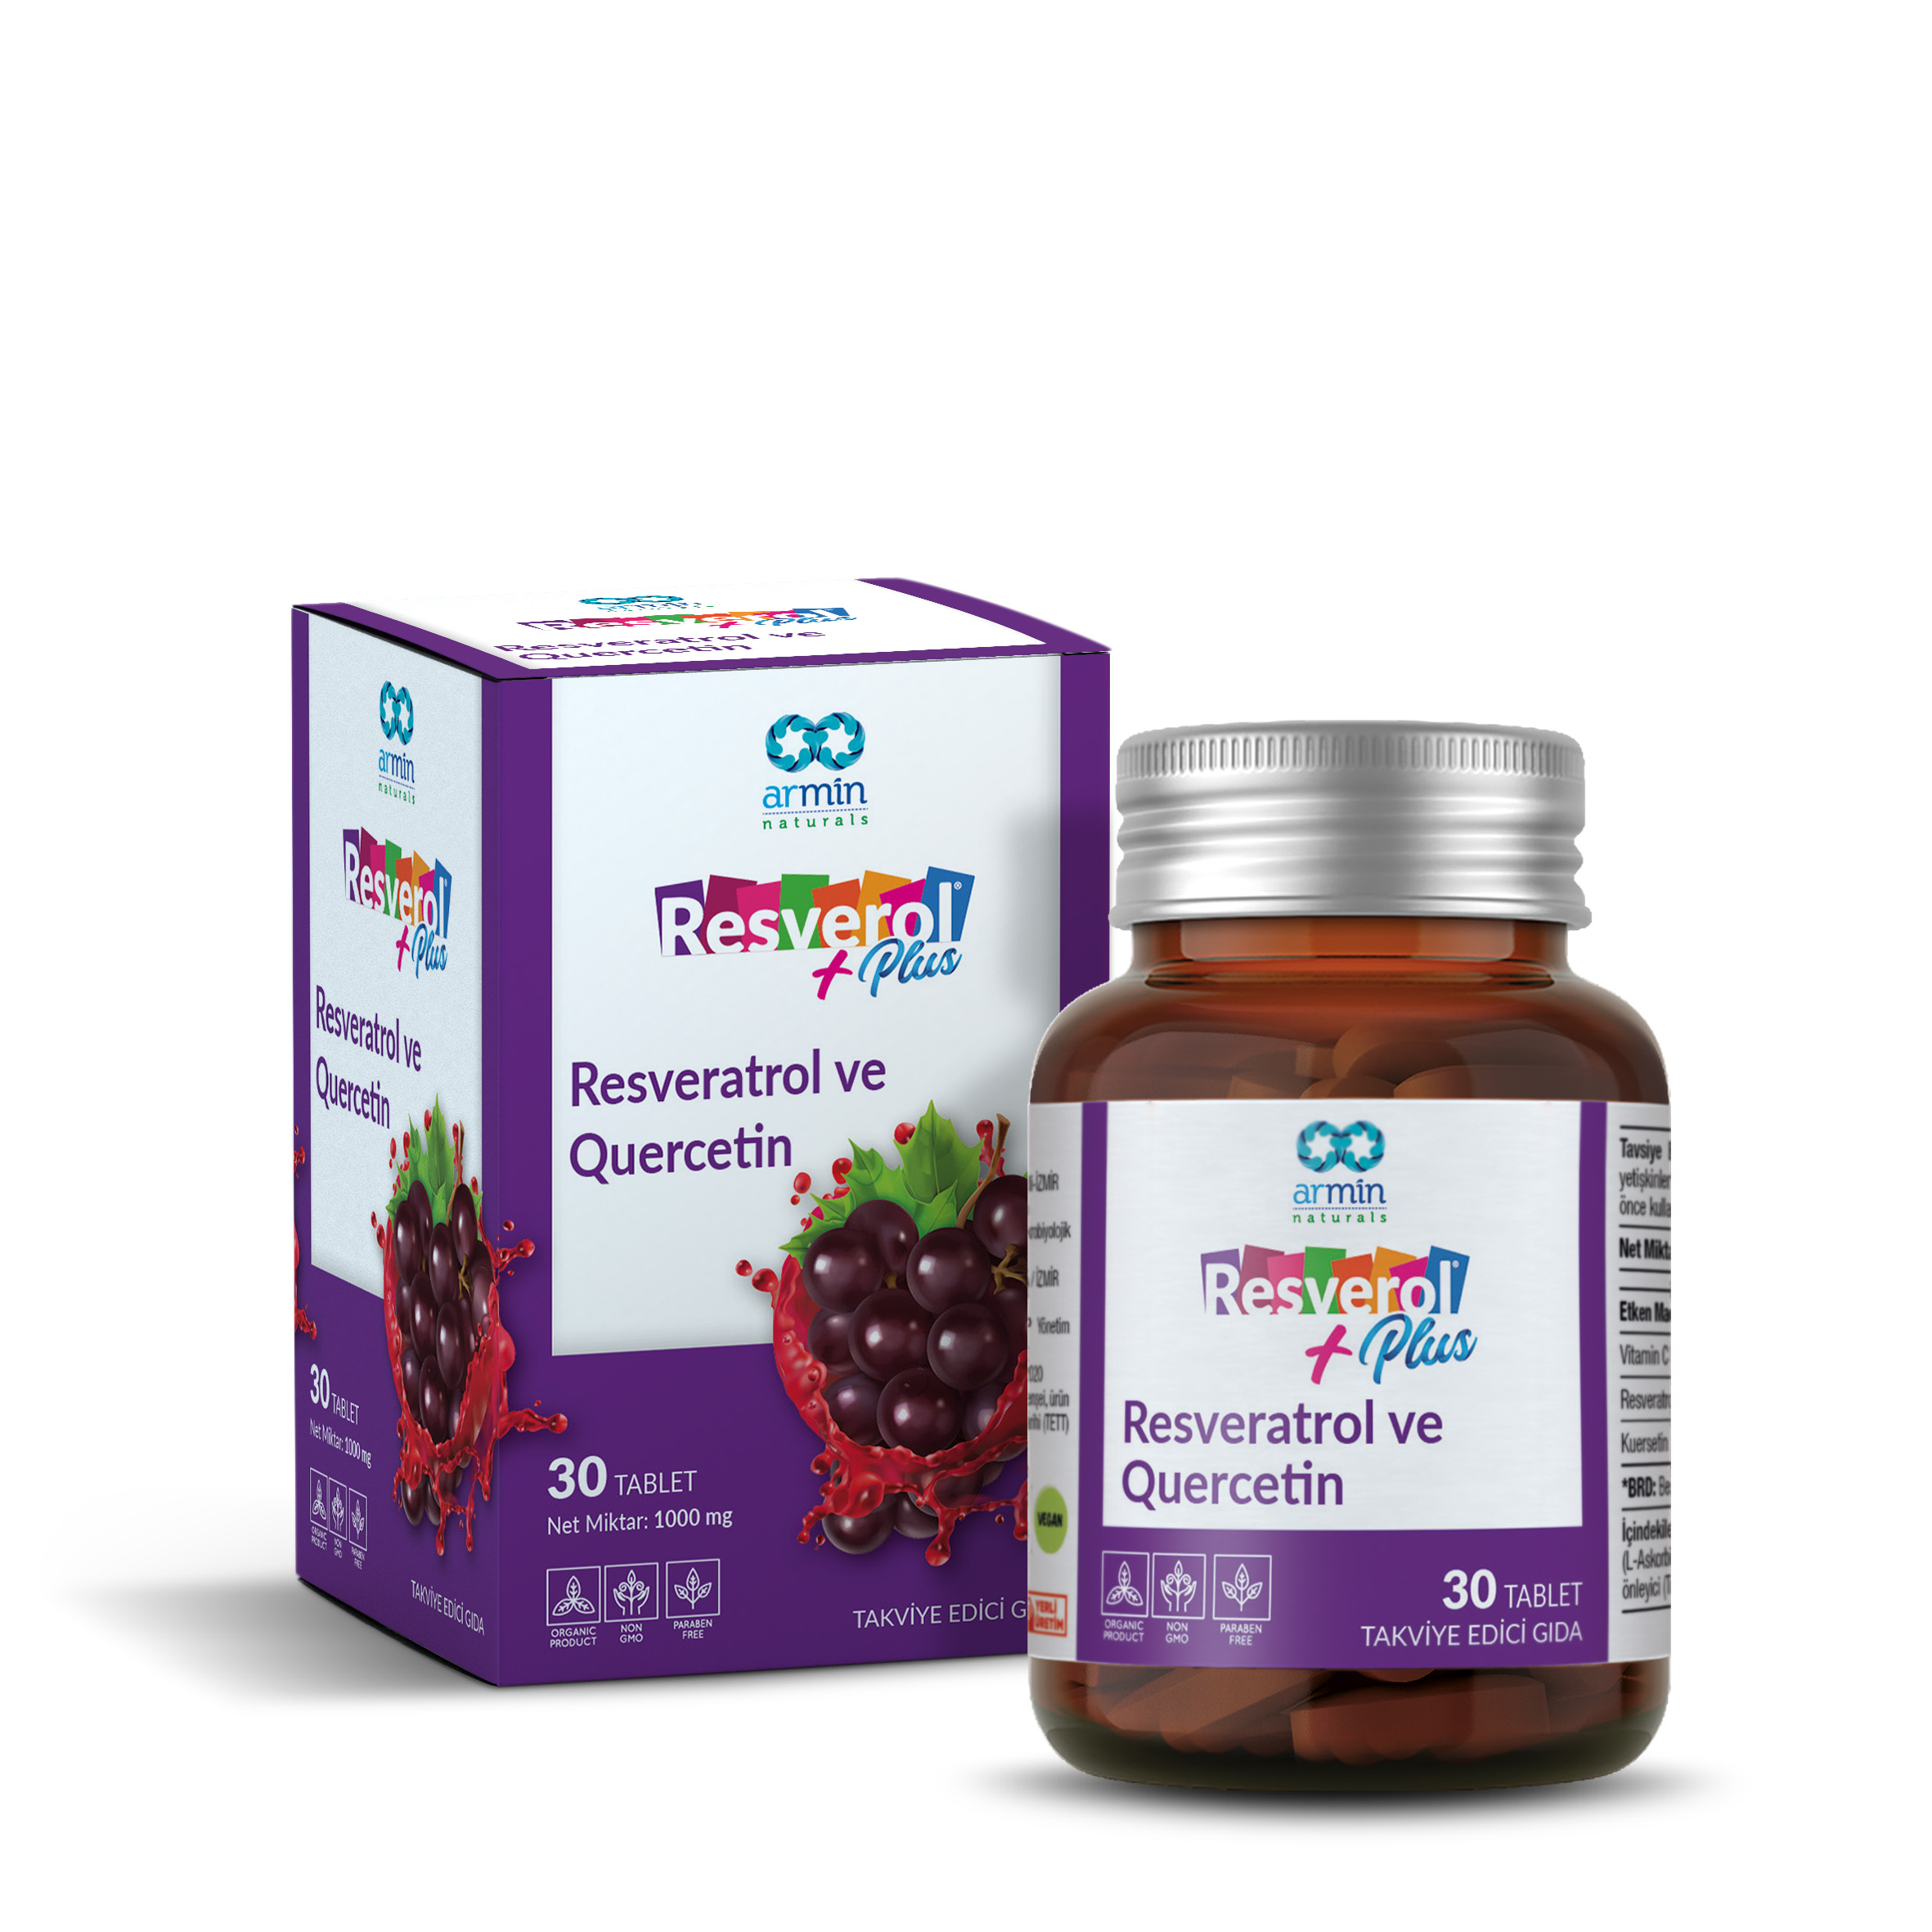 Resverol Plus Resveratrol ve Quercetin Takviye Edici Gıda 30 Tablet